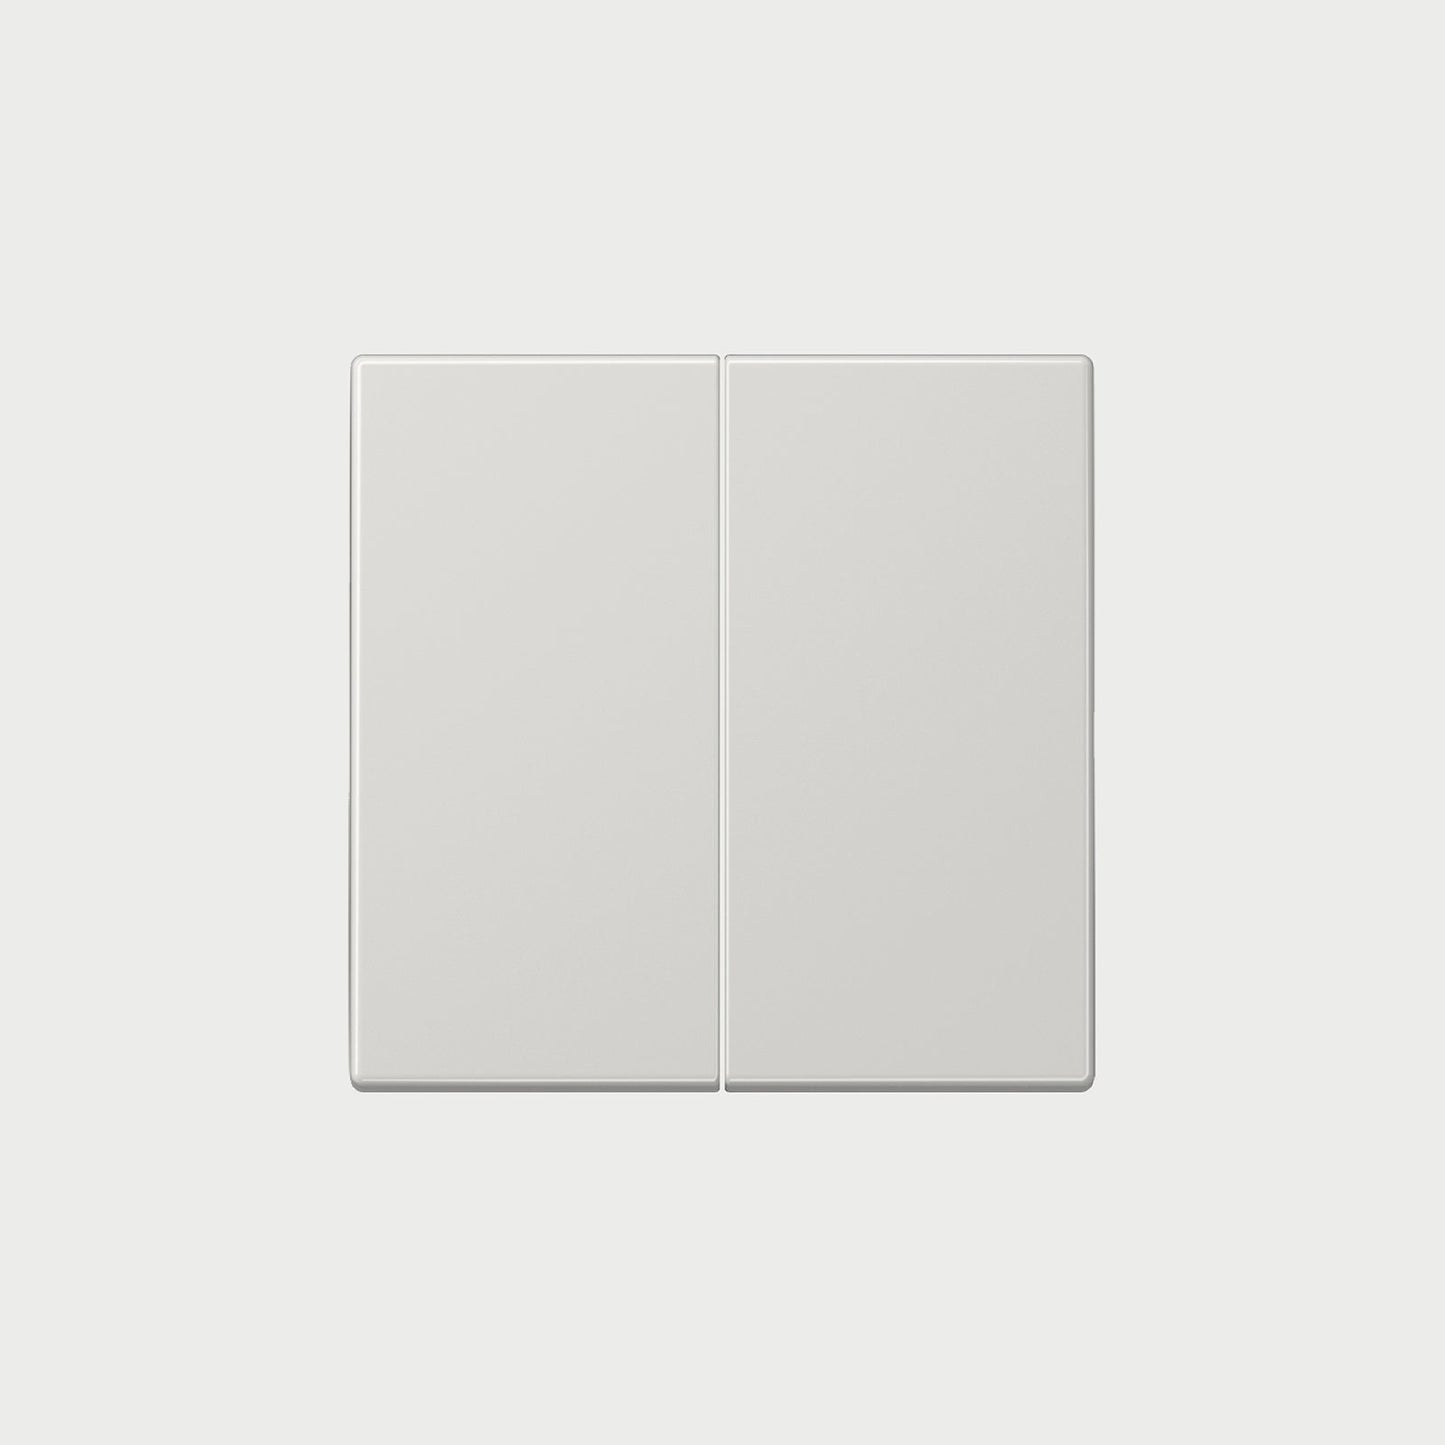 Ls995 (Plastic) Light Grey Cover